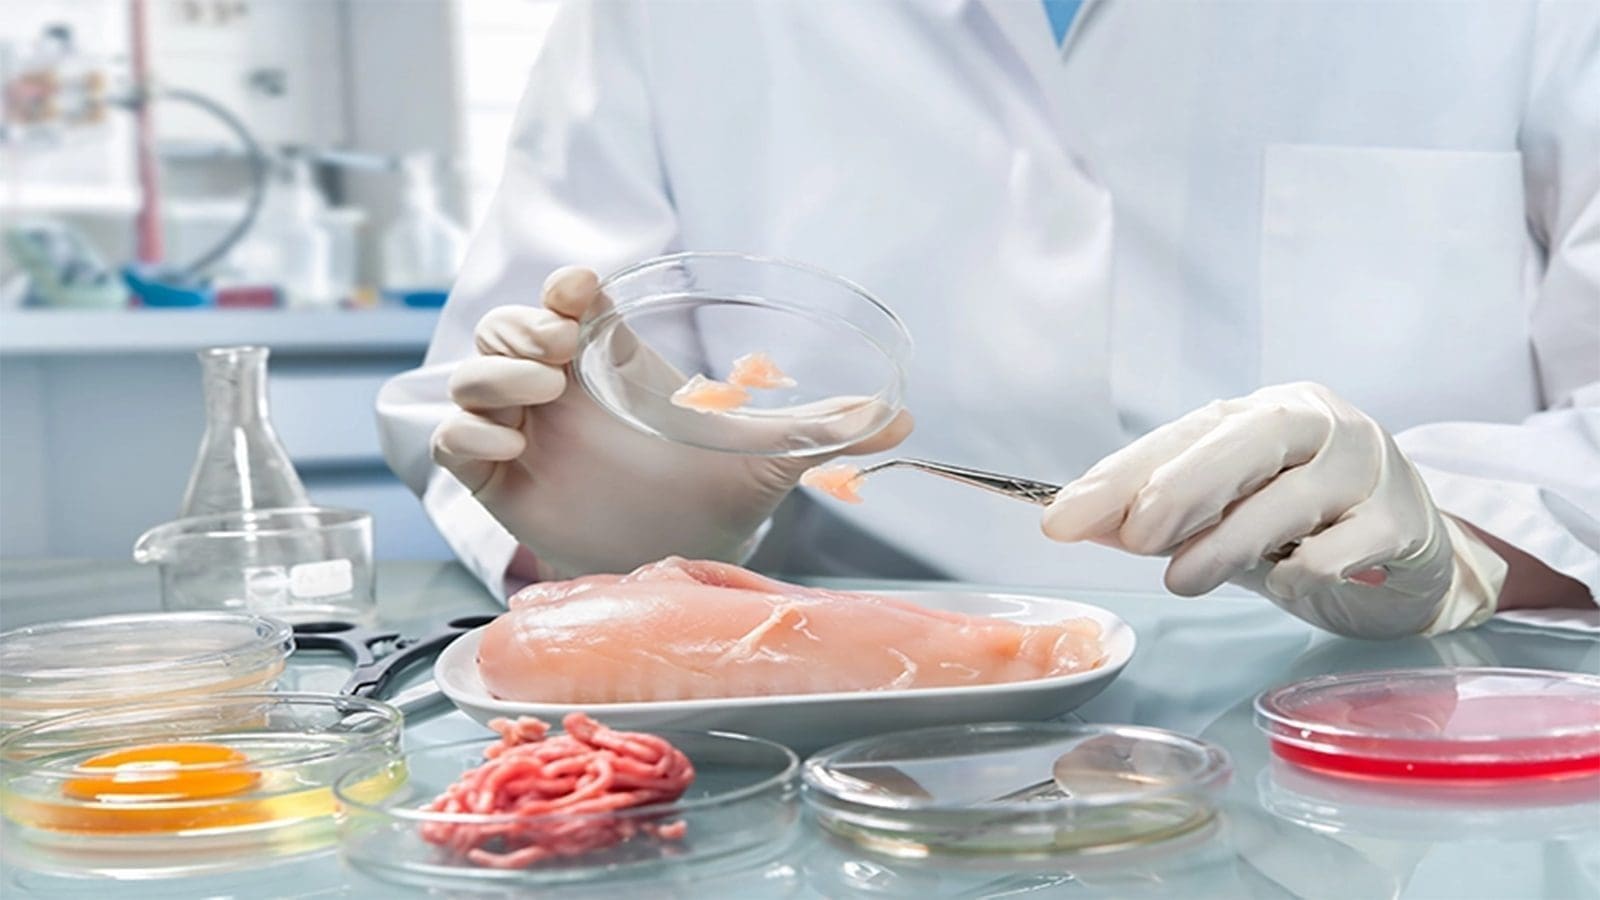 Food Pathogen Testing Market to cross U.S$ 9 billion by 2030